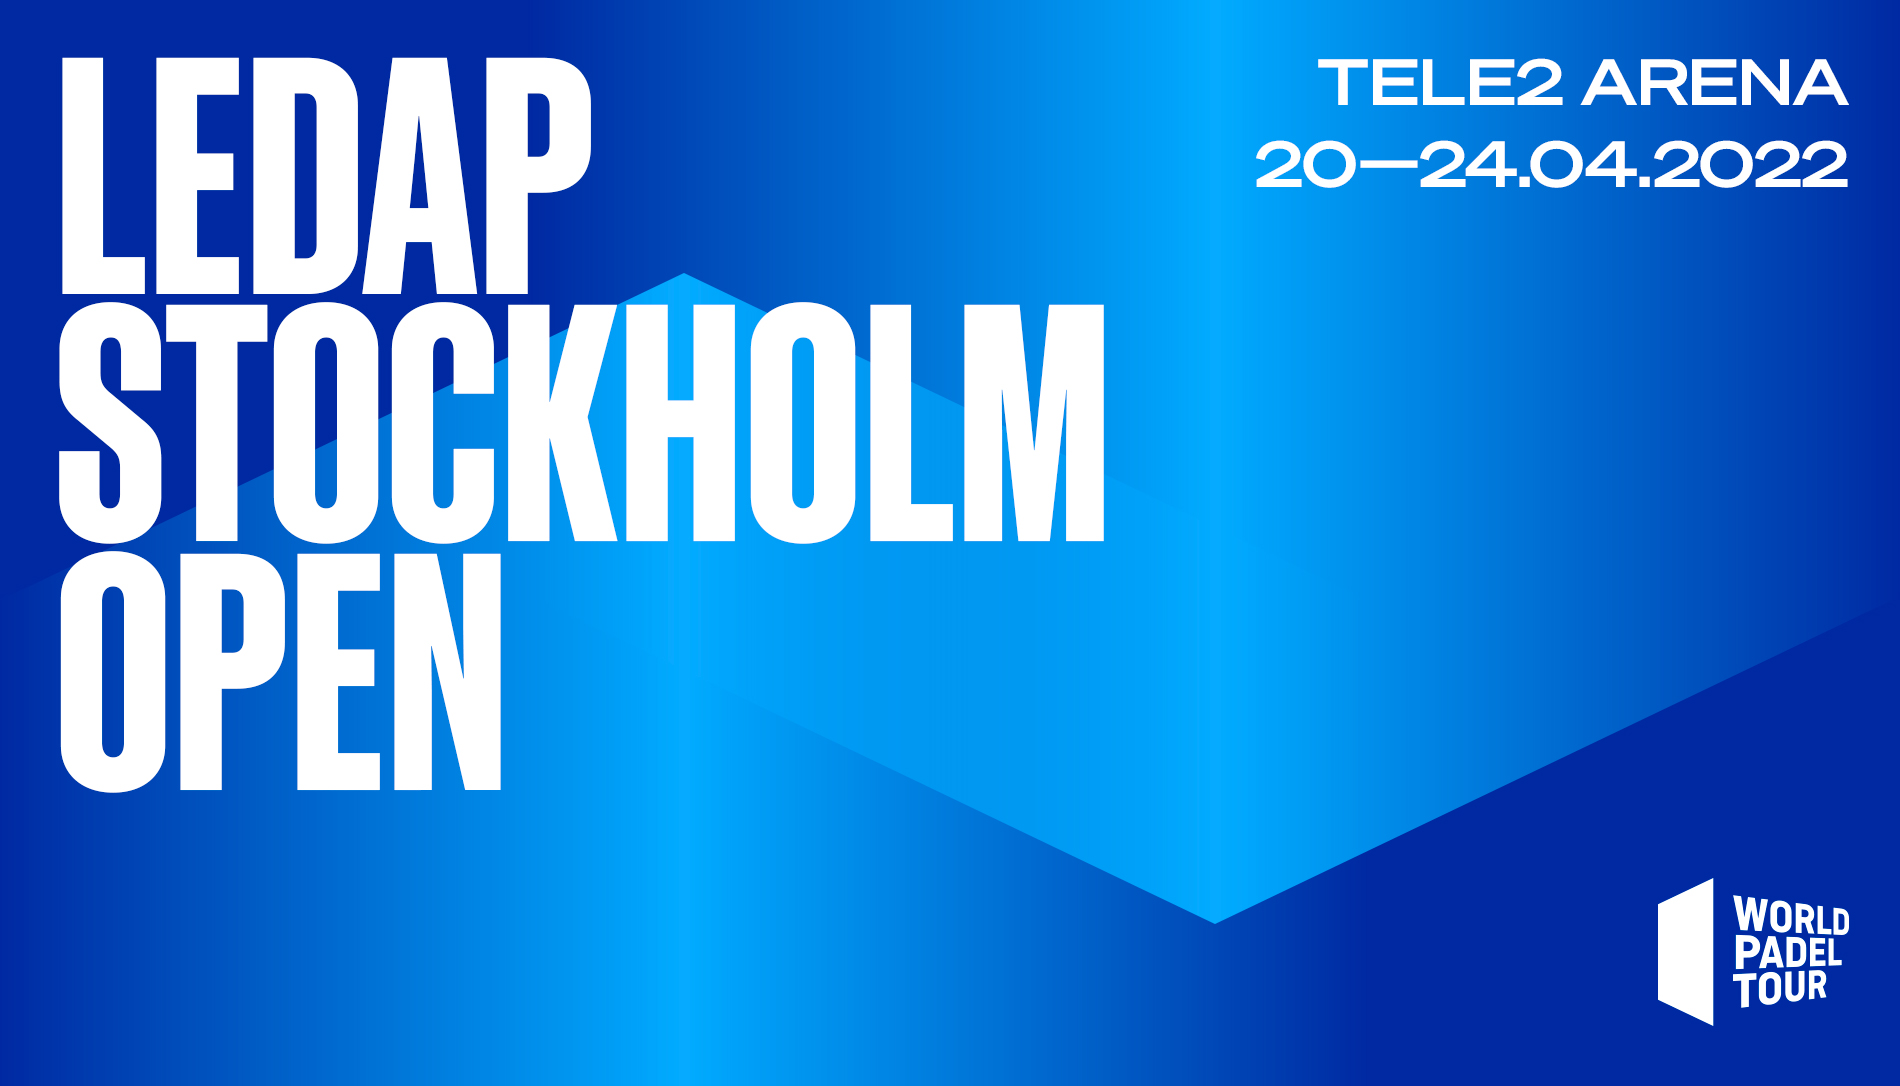 World Padel Tour celebrará el LeDap Stockholm Open en el Tele2 Arena